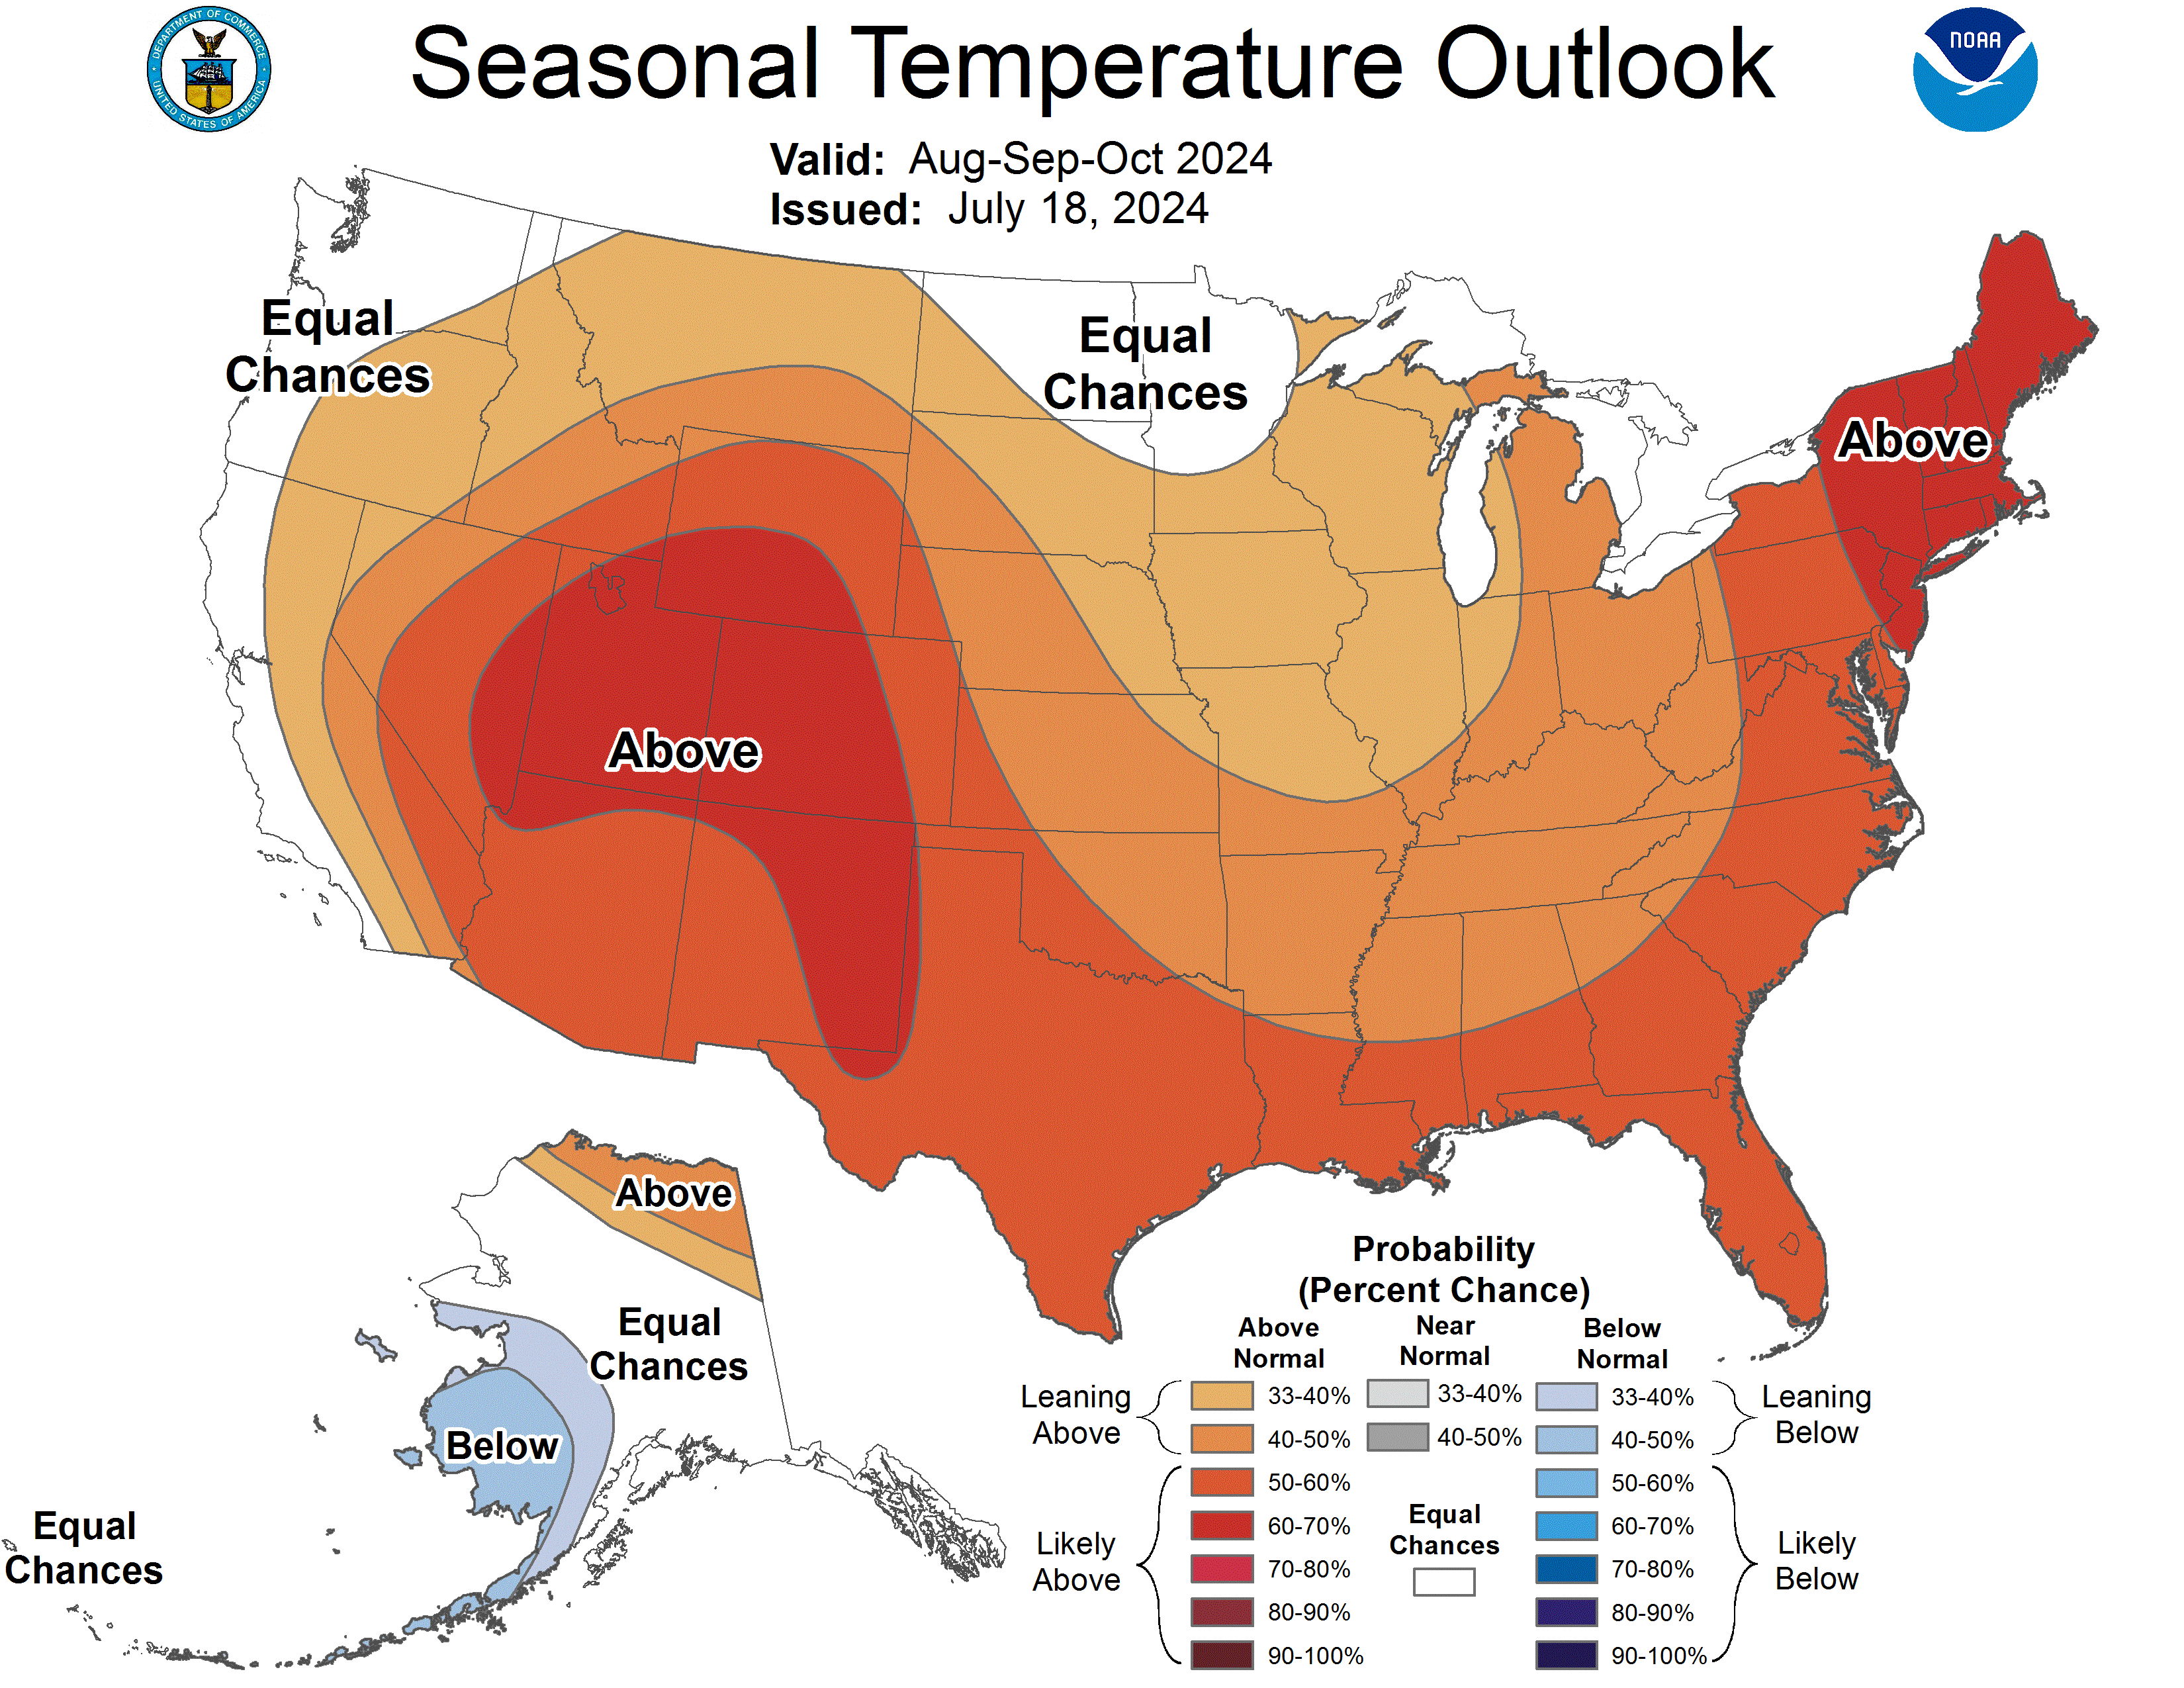 NOAA outlook for August, September, October 2024 